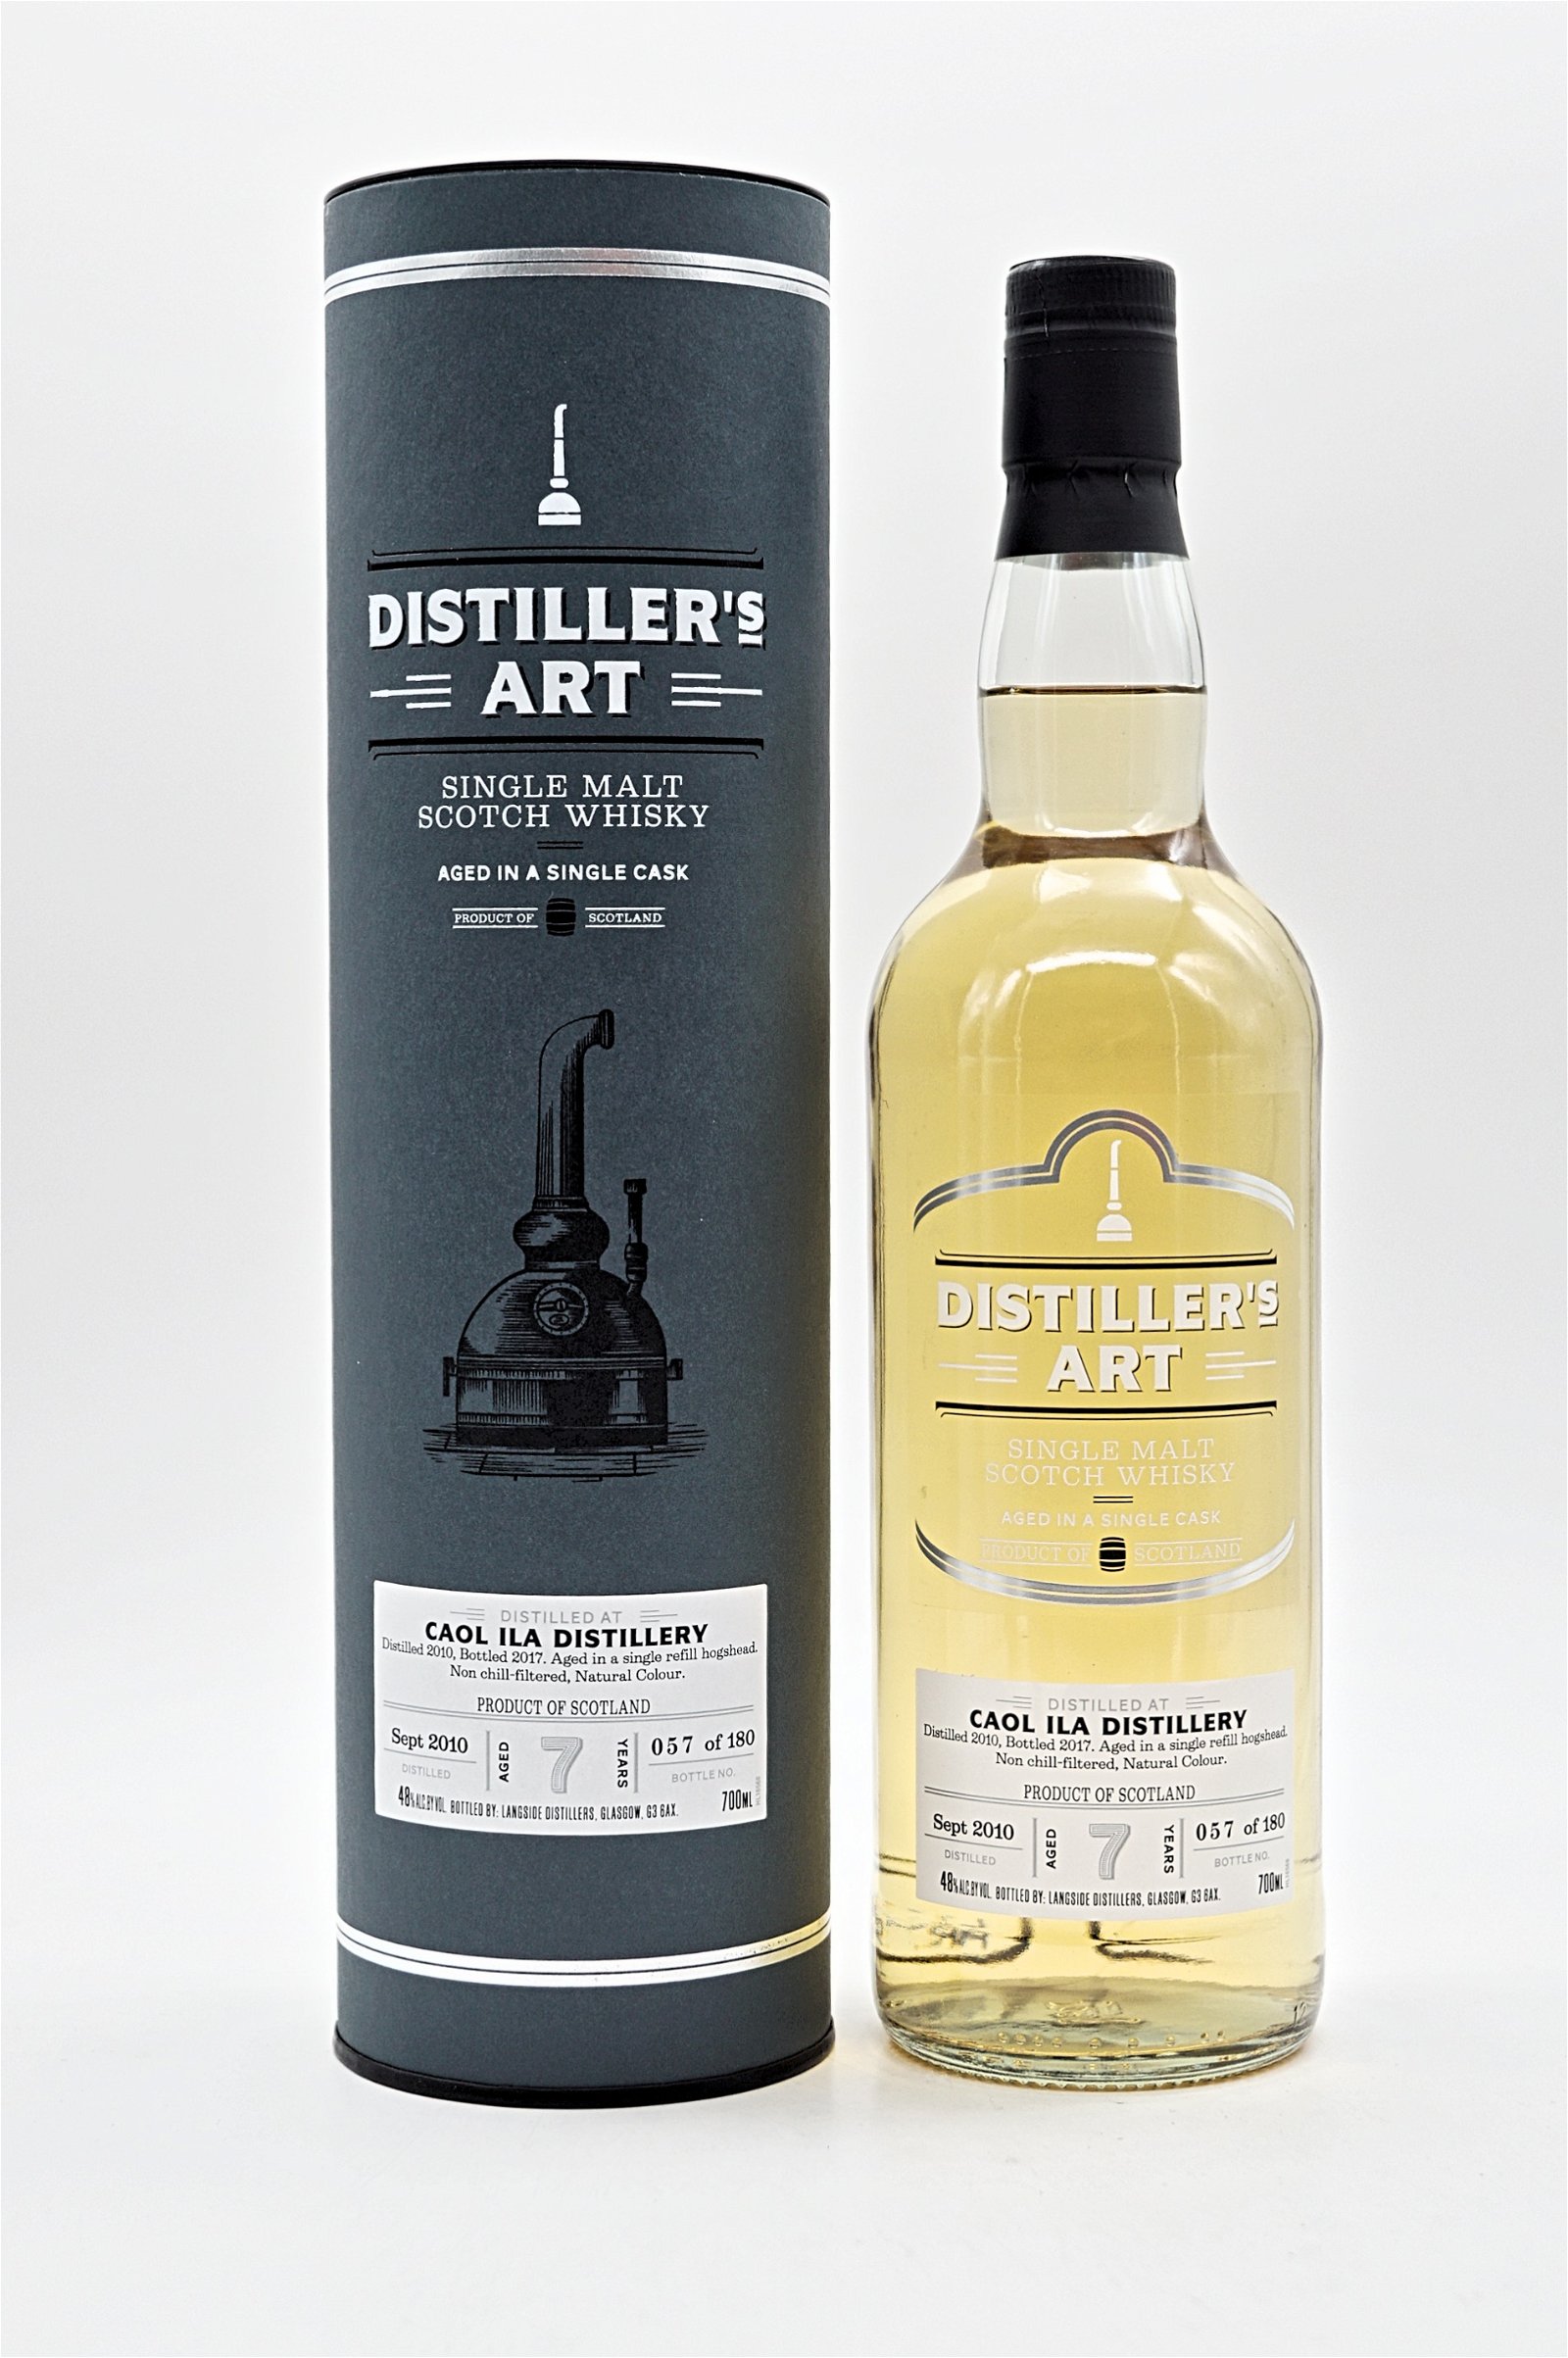 Distillers Art Caol Ila Distillery 7 Jahre 48% 180 Fl. Single Cask Single Malt Scotch Whisky 